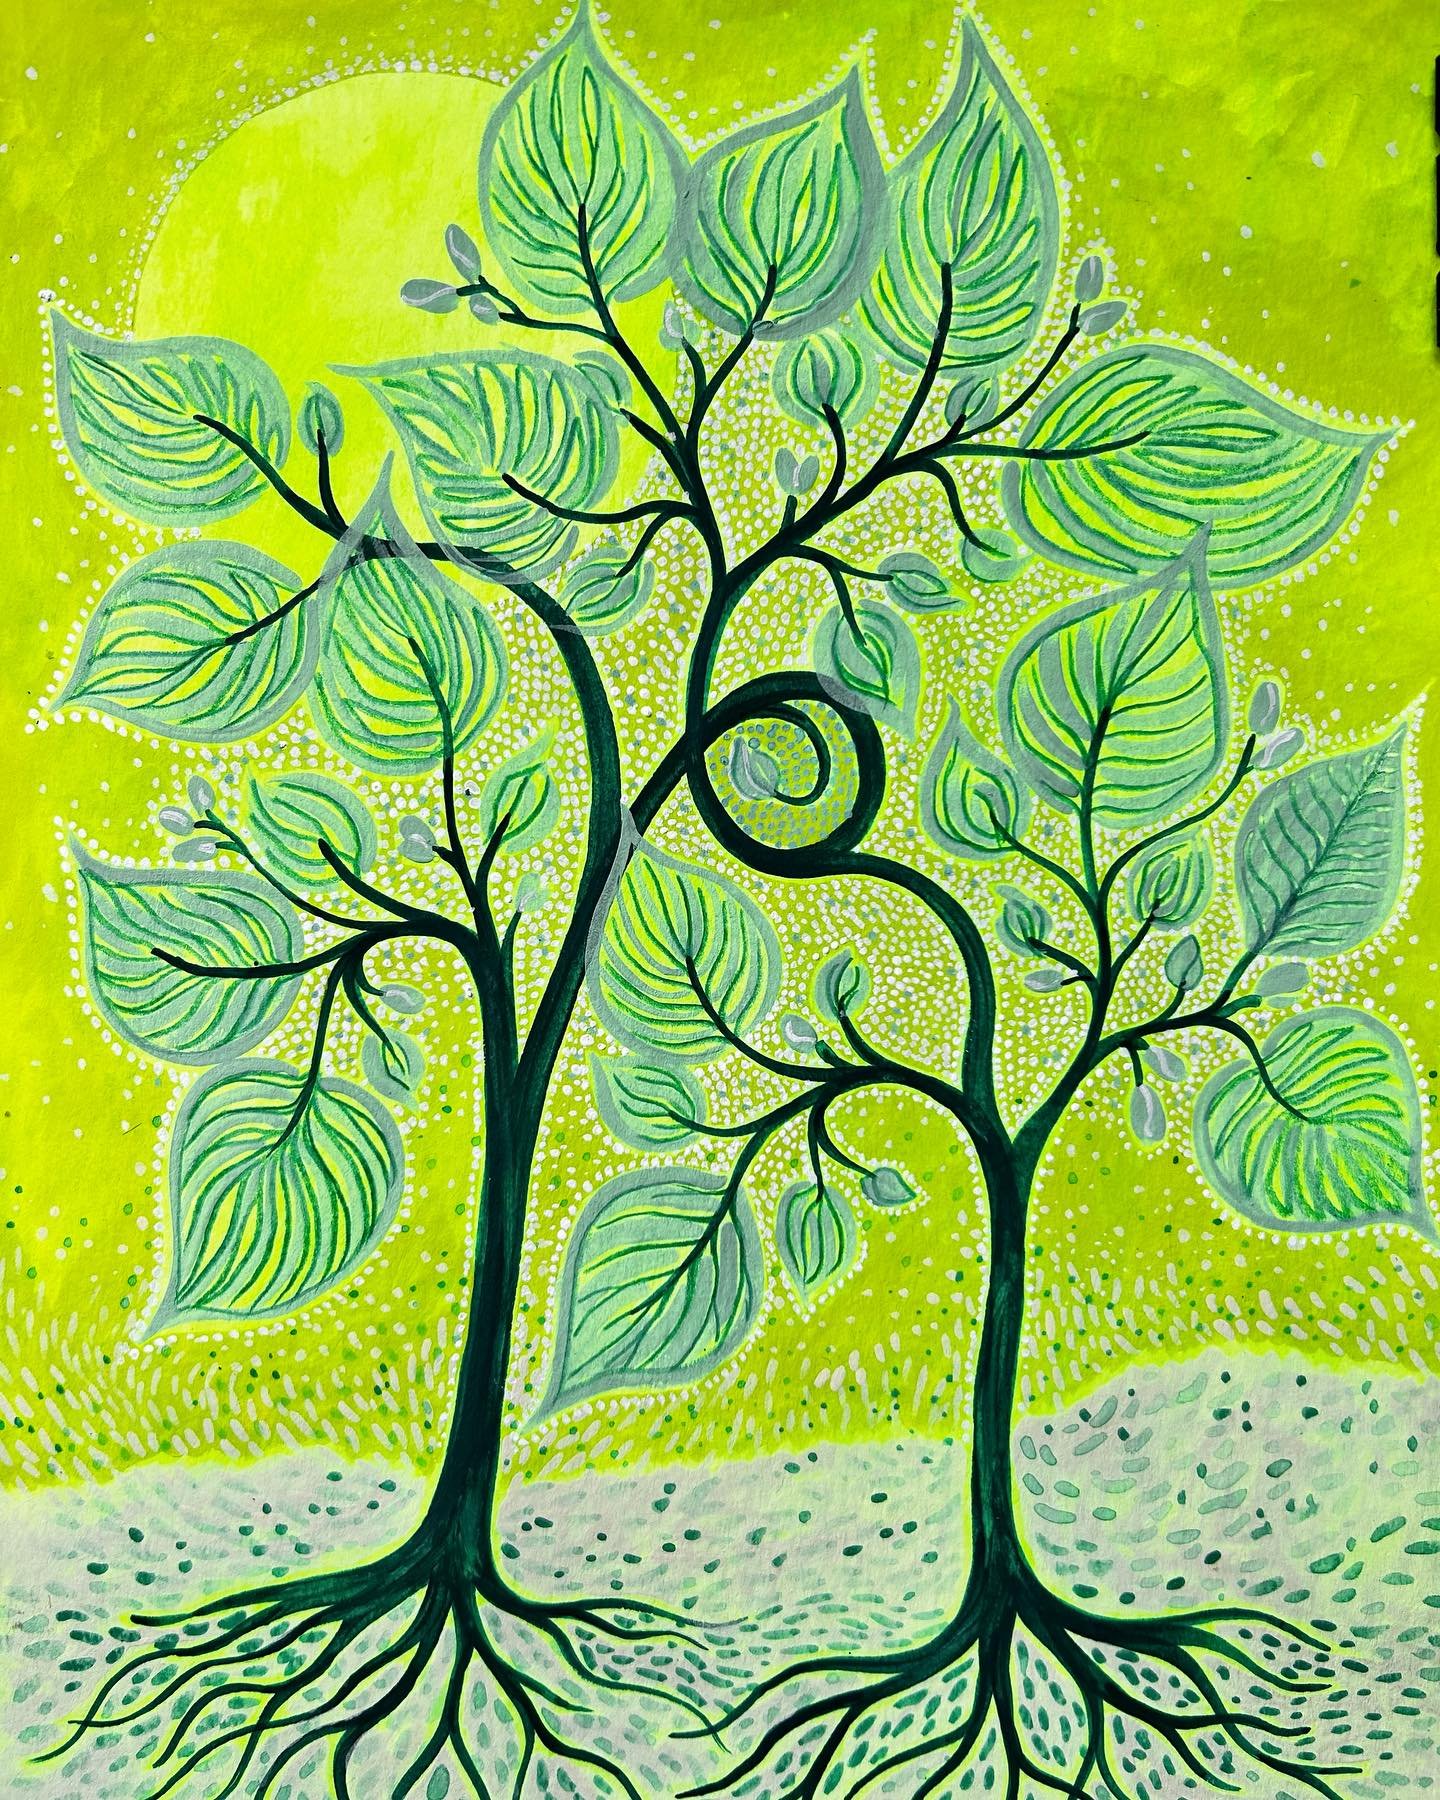 Un autre duo la branche en boucle 💚

#art #tree #natureinspired #painting #artist #green #nature #inspiredbynature #mixedmediaart #landscape #intuitiveart #artwork #color